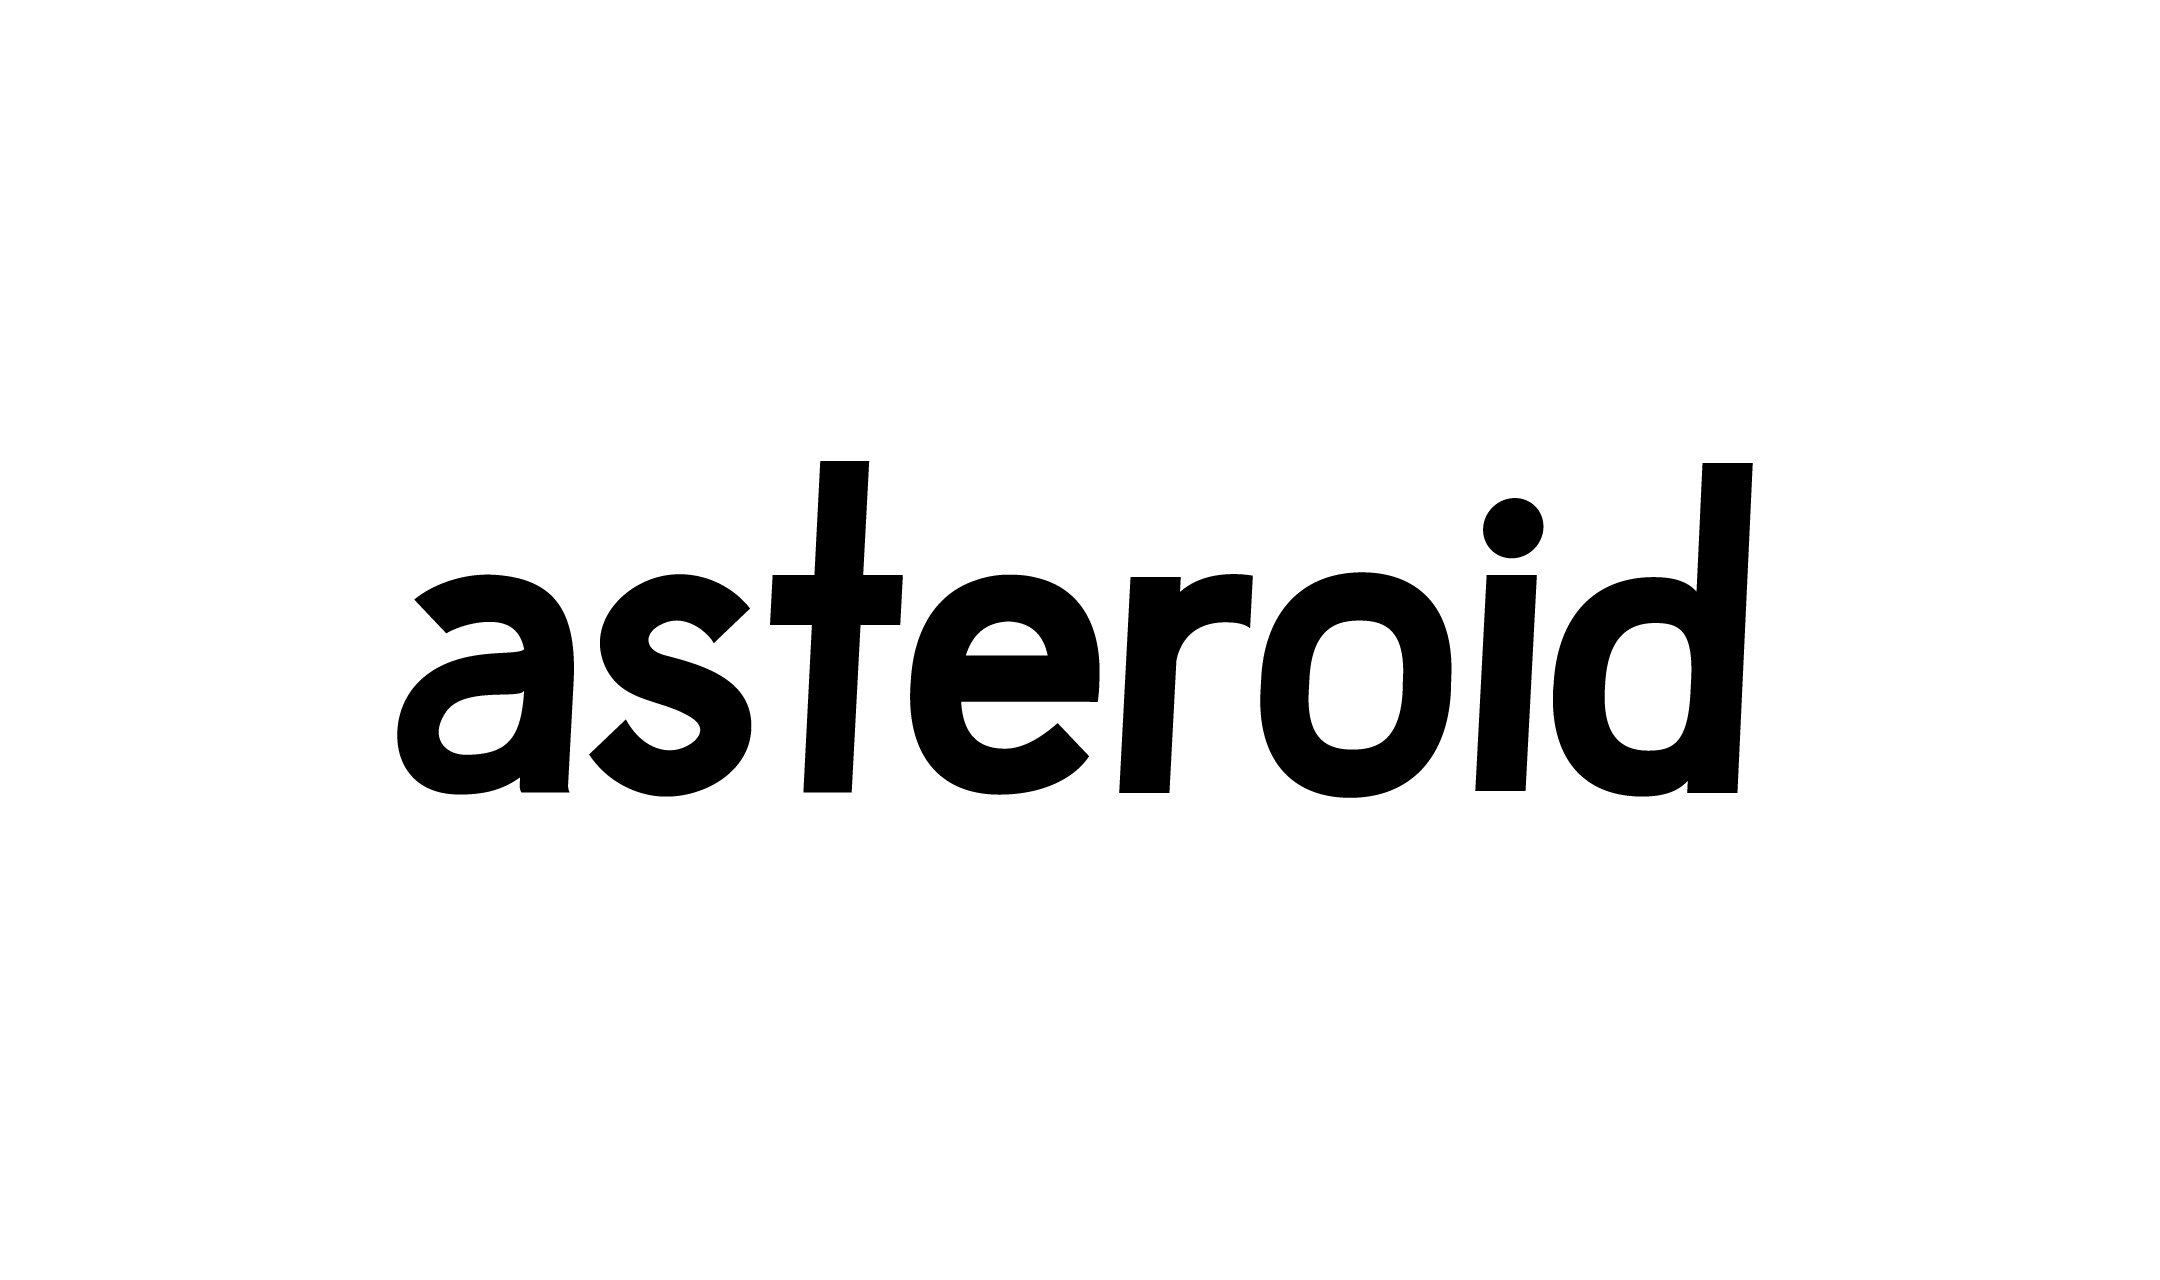 "asteroid"